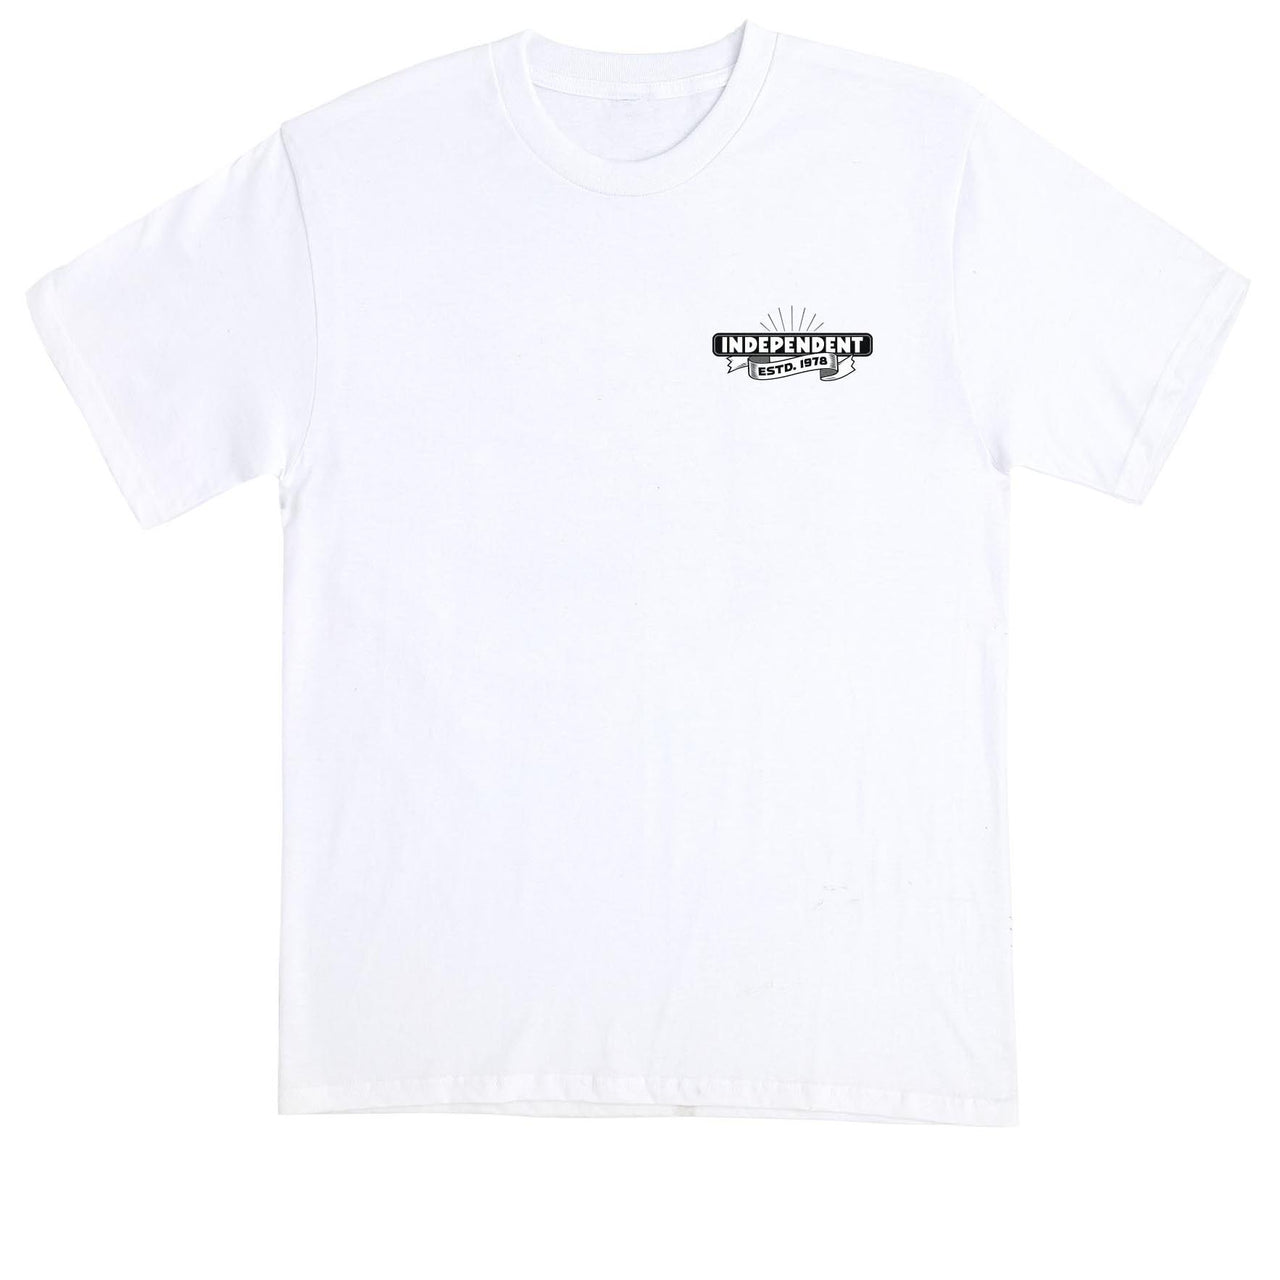 Independent RTB Sledge T-Shirt - White image 2